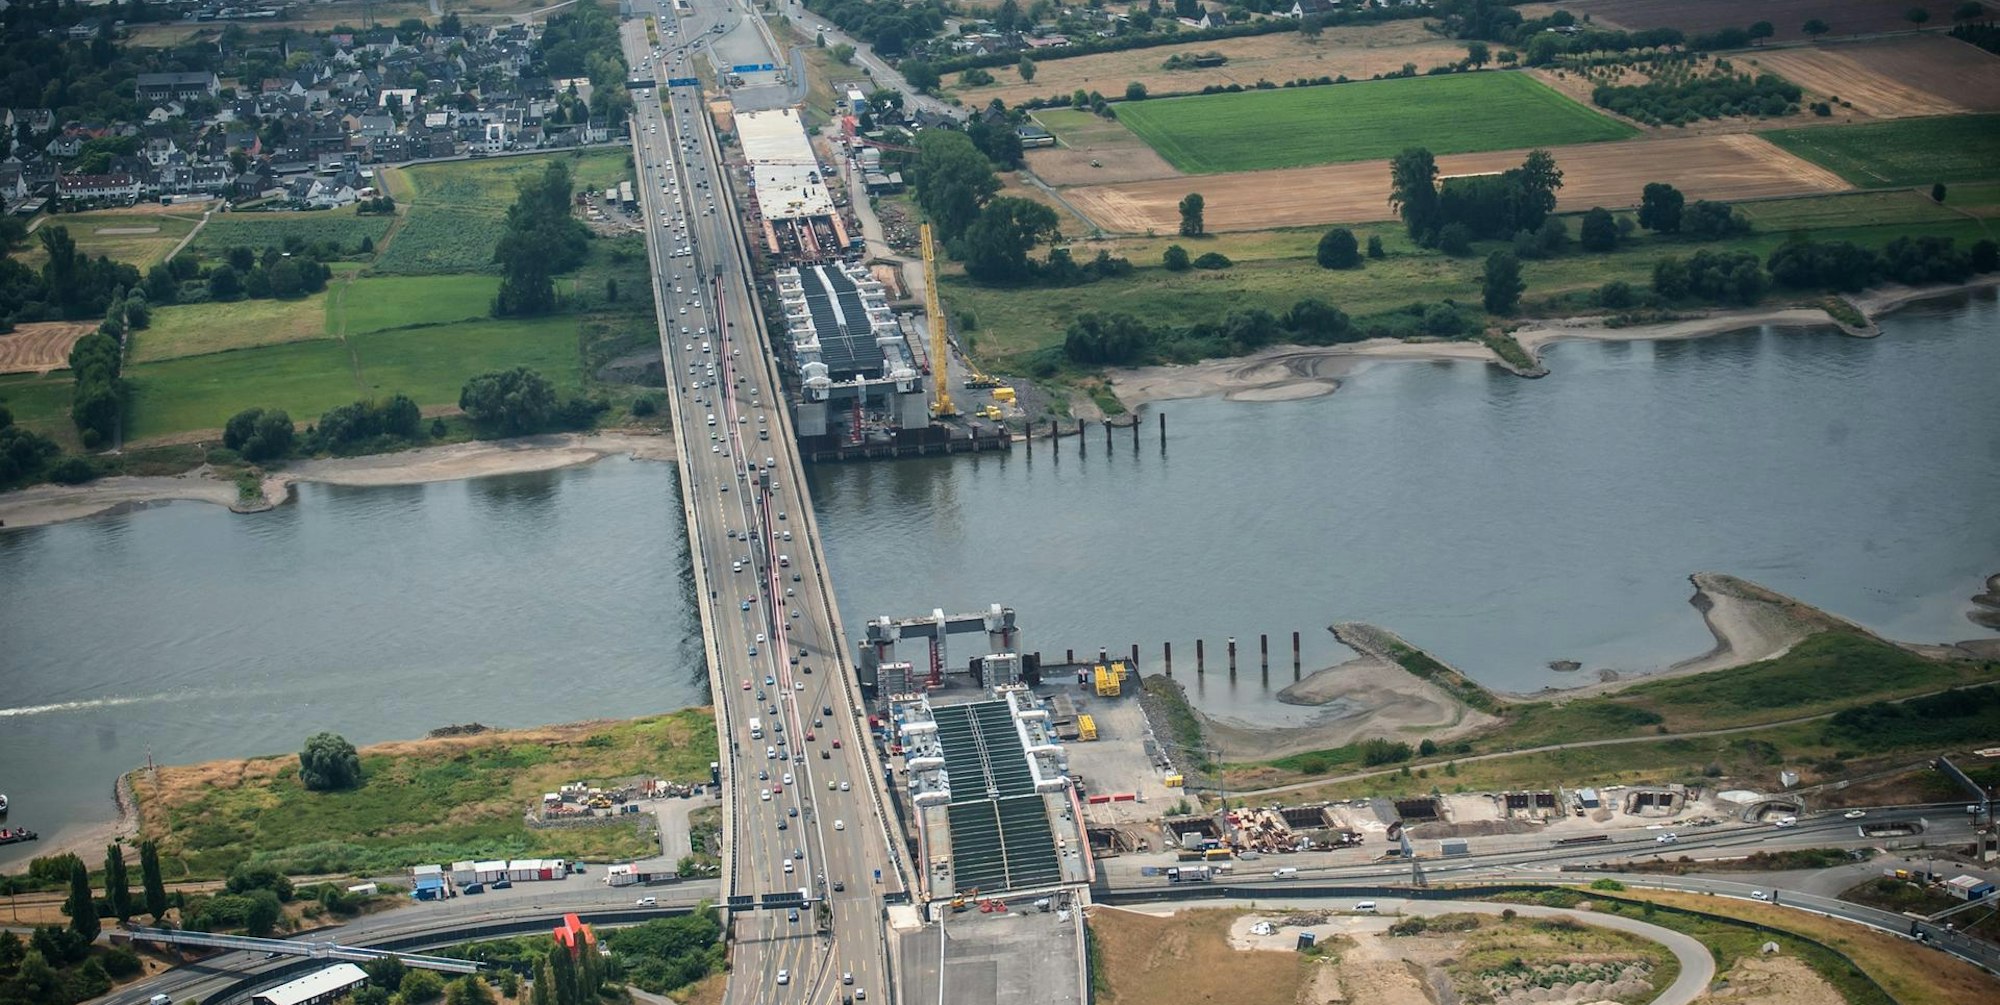 Rheinbrücke Leverkusen Luftbild